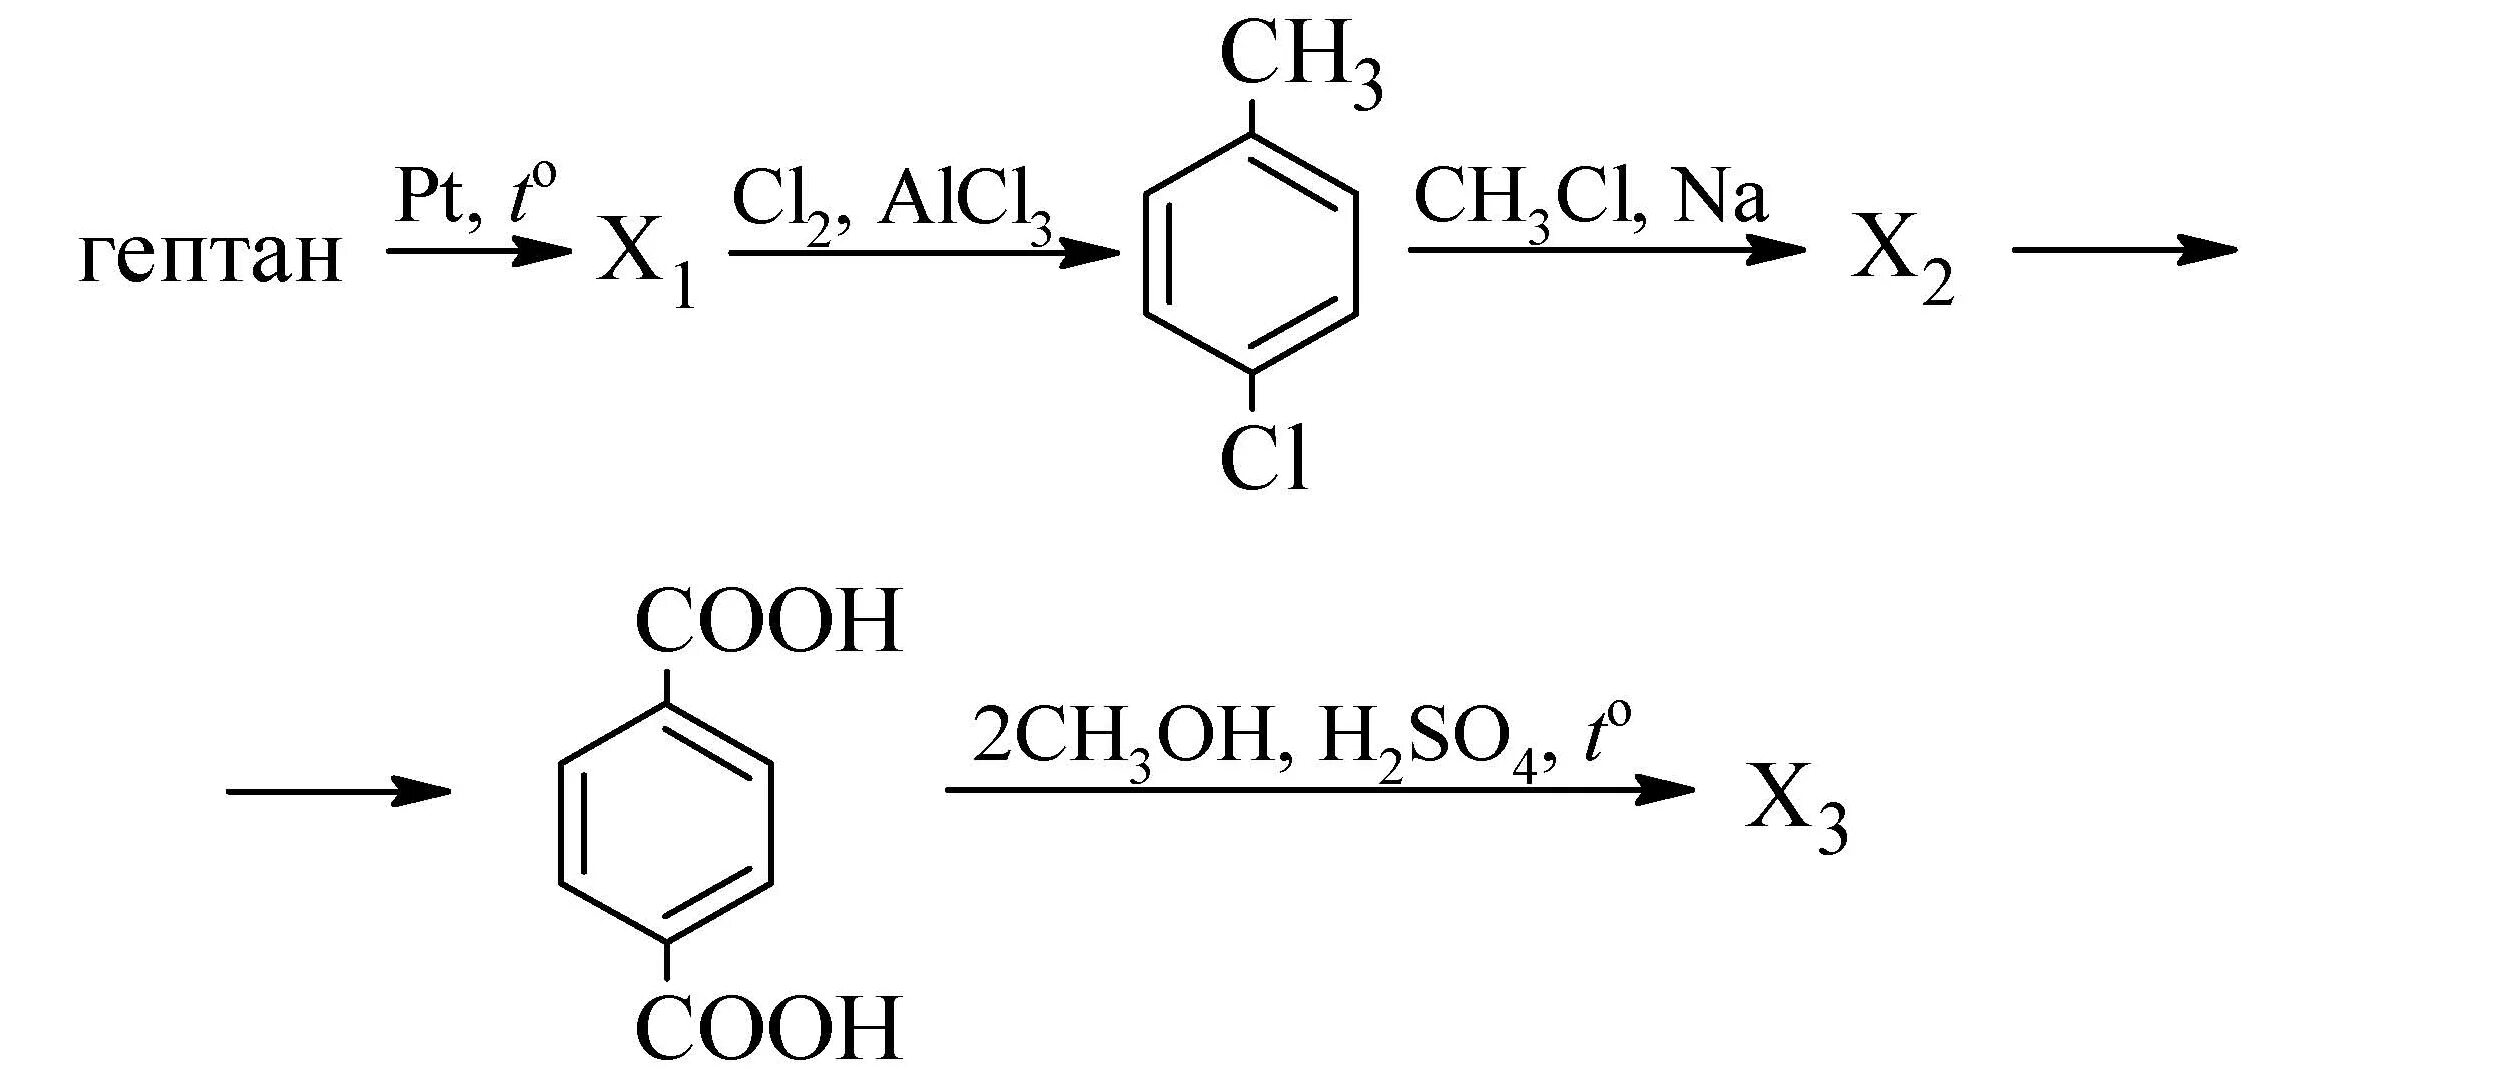 C6h6 cl2 реакция. Гептан pt t реакция. Гептан pt t x1 cl2. Цепочки реакций бензол. Цепочки превращения органических веществ.